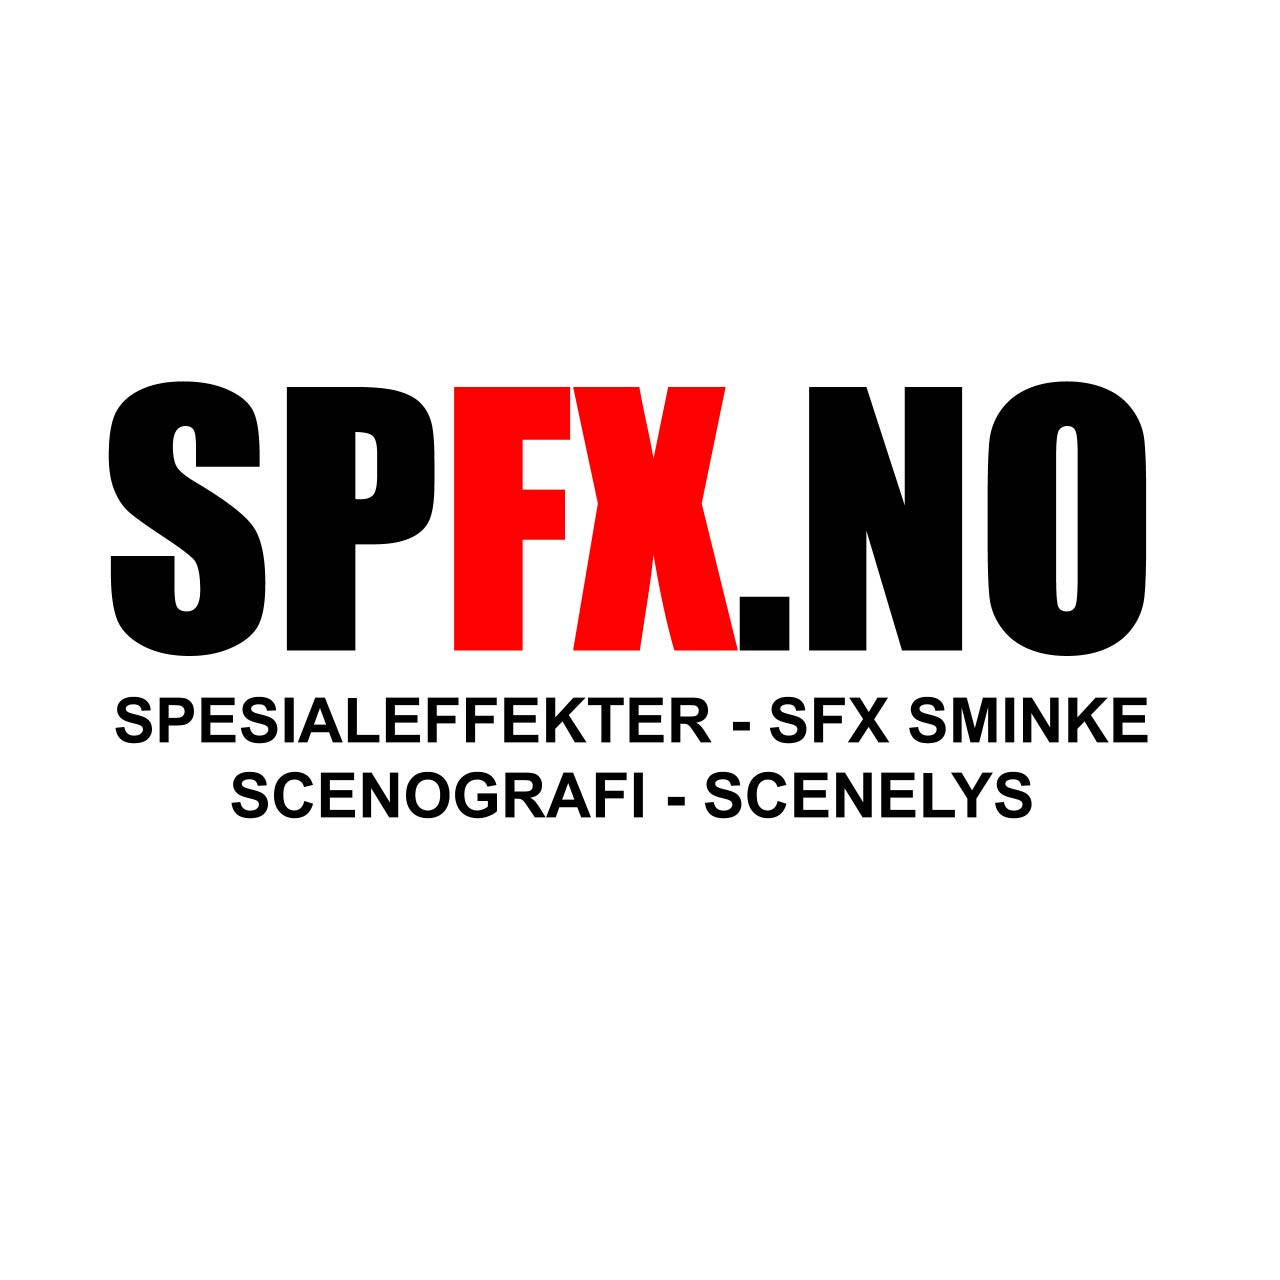 spfx.no spesialeffekter